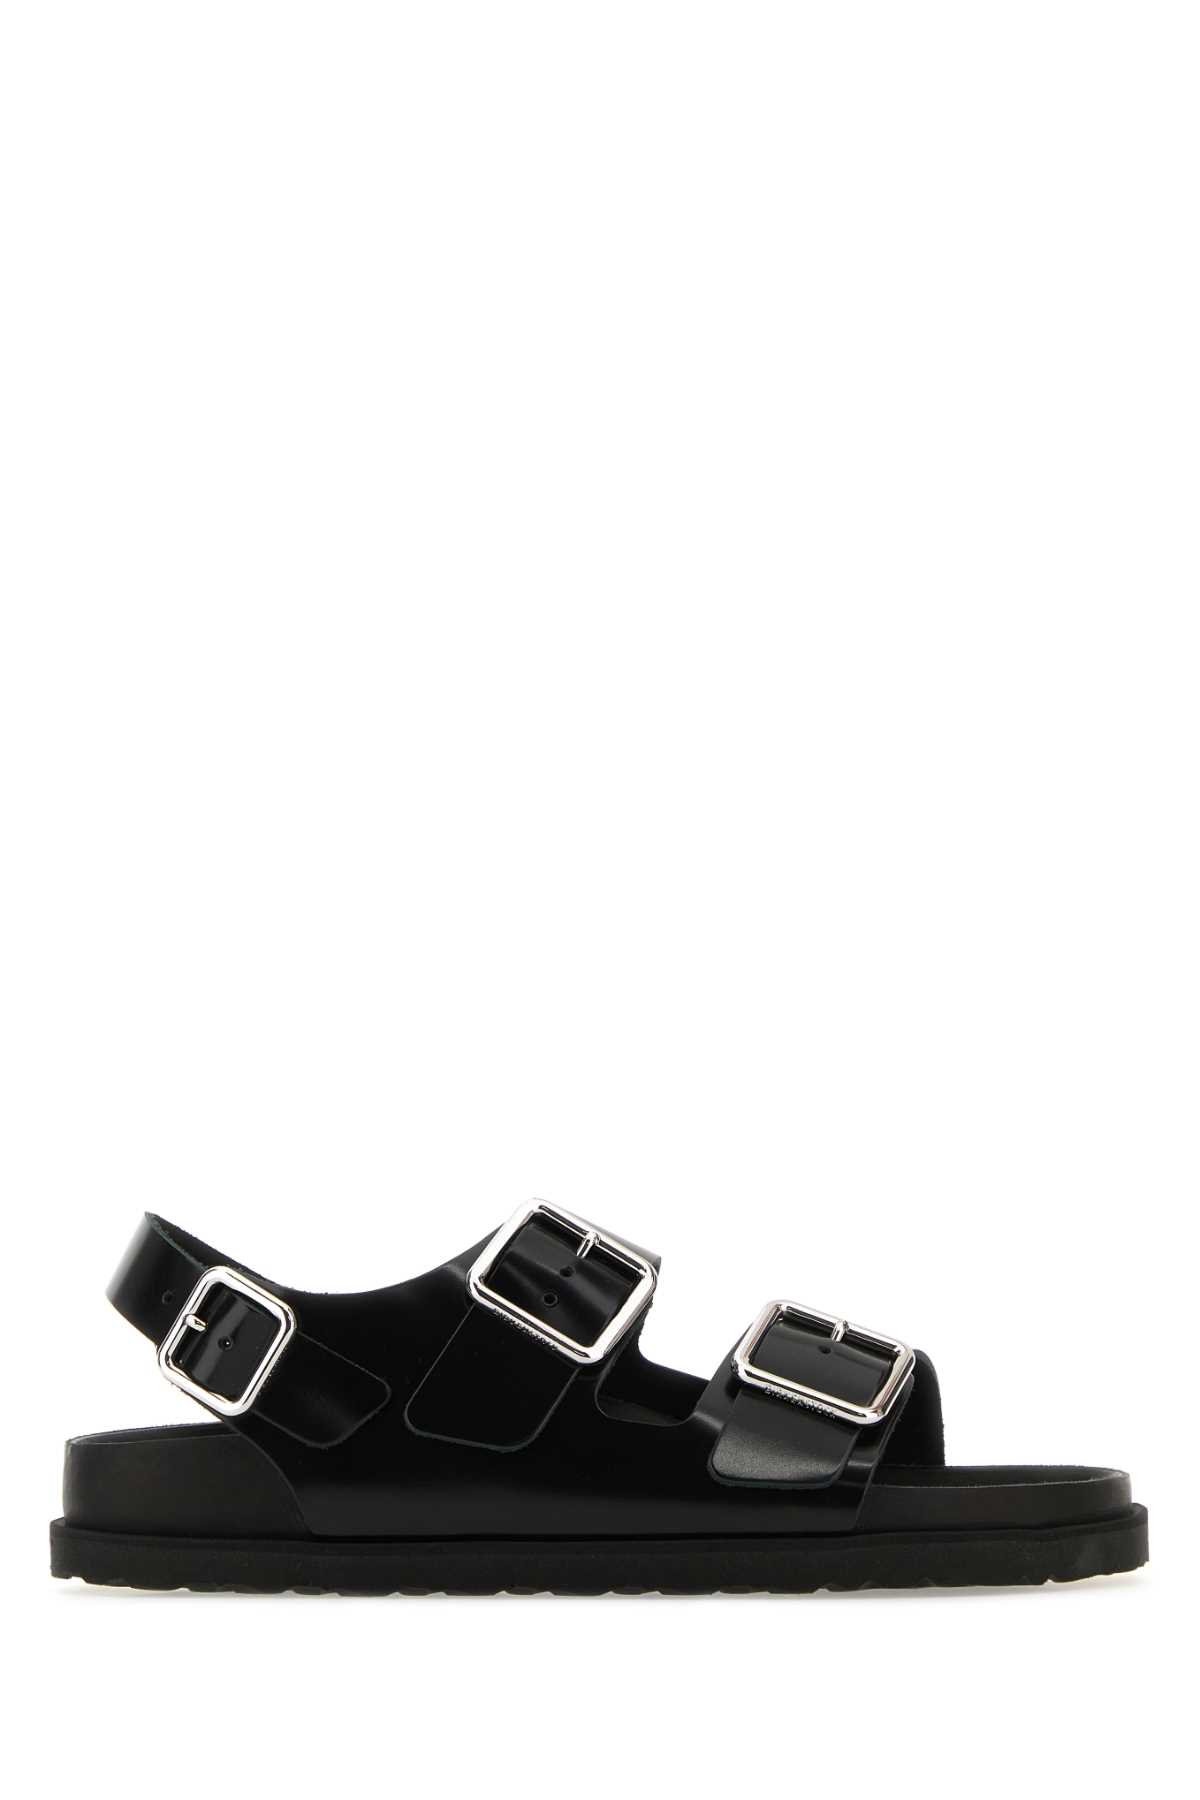 Shop Birkenstock Black Leather Milano Avantgarde Sandals In Blacksilver